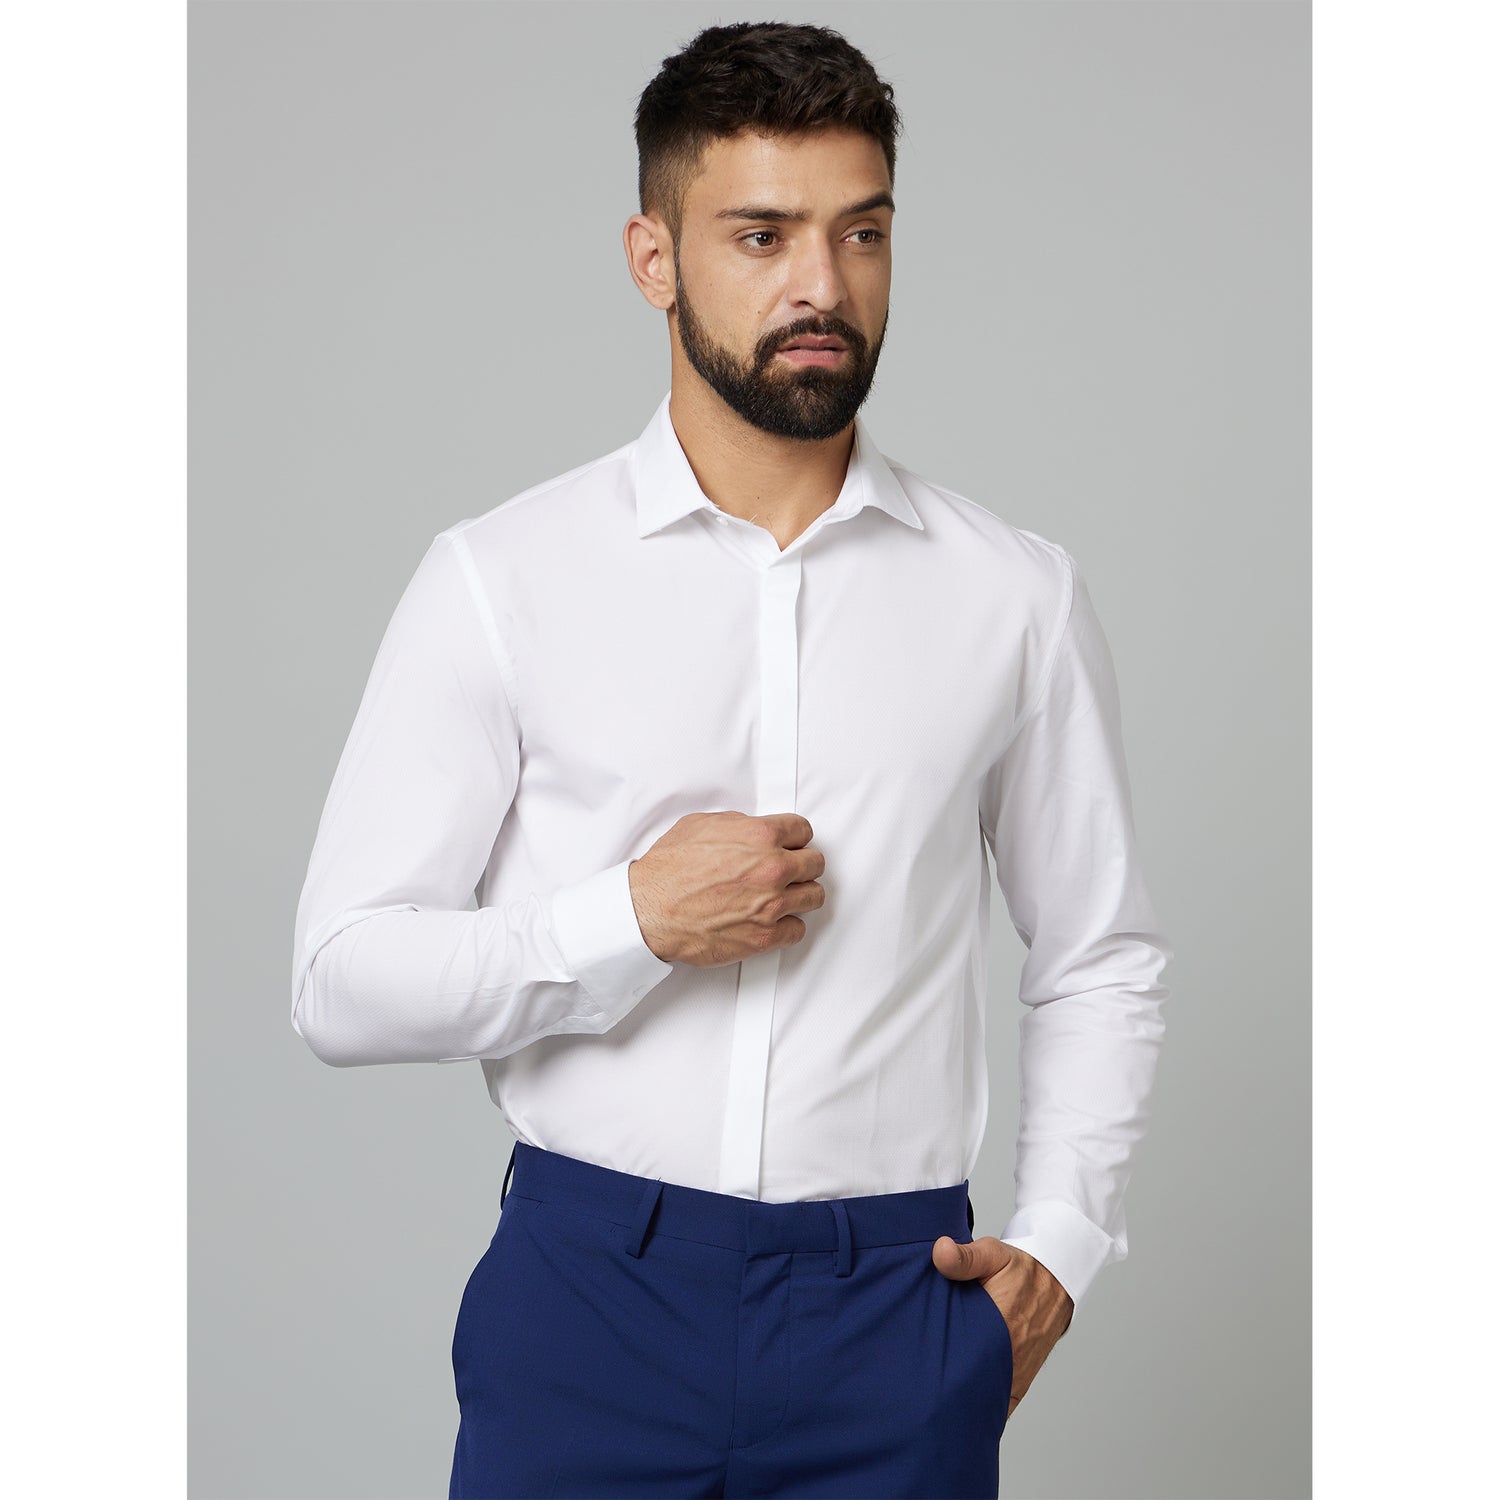 White Classic Spread Collar Cotton Formal Shirt (DAWEDDING3)